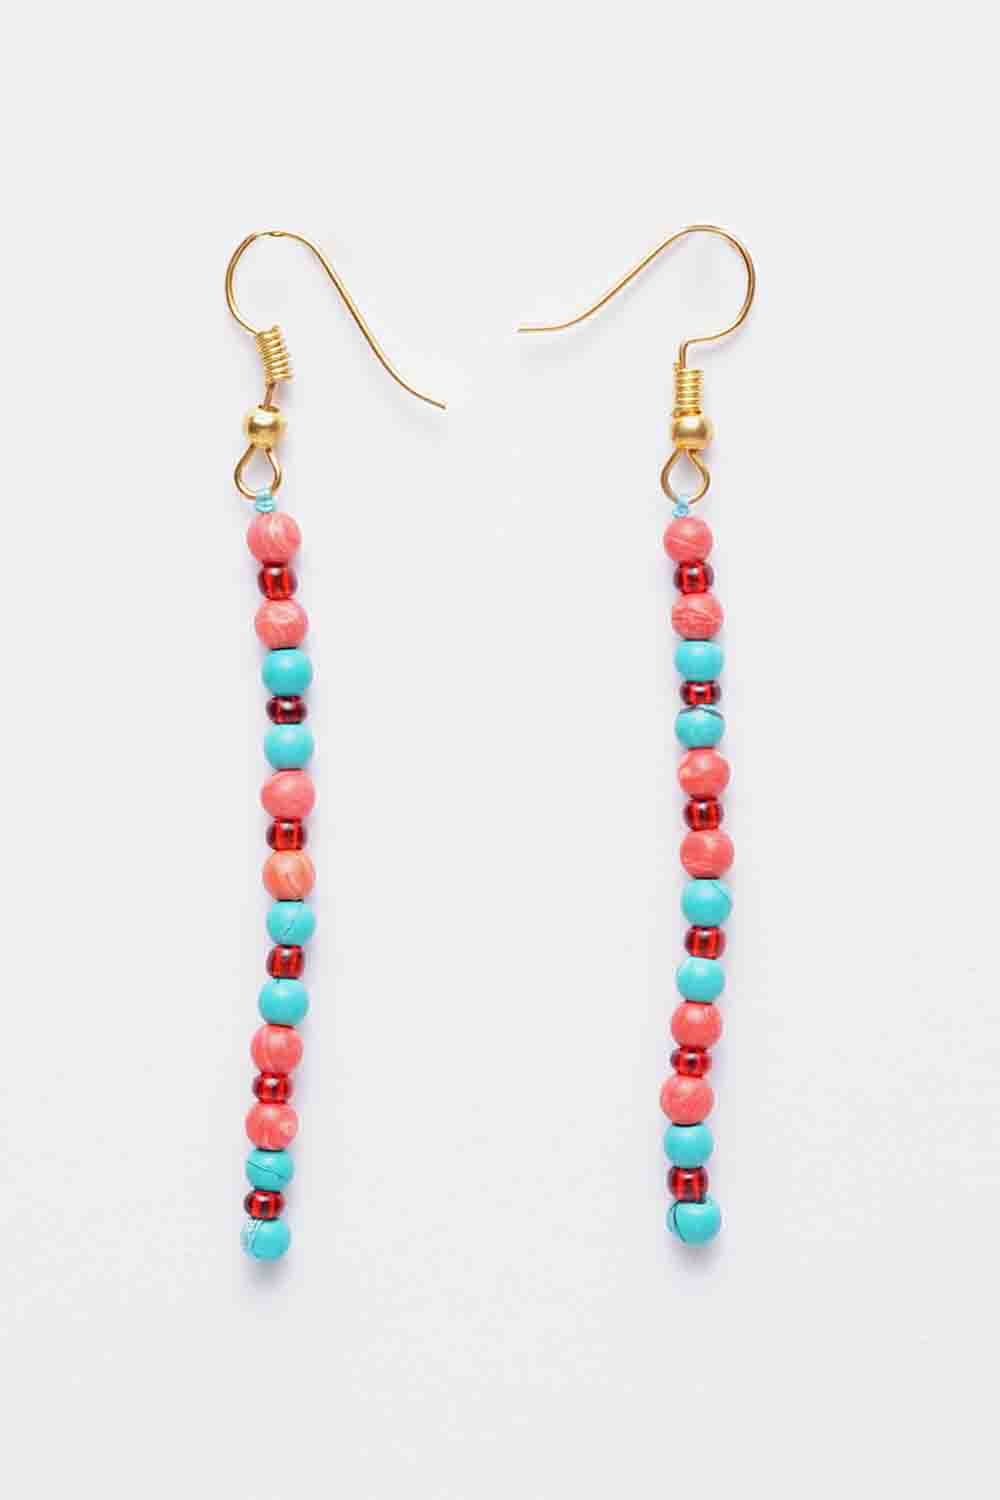 Women's Copper Earrings in Blue and Red